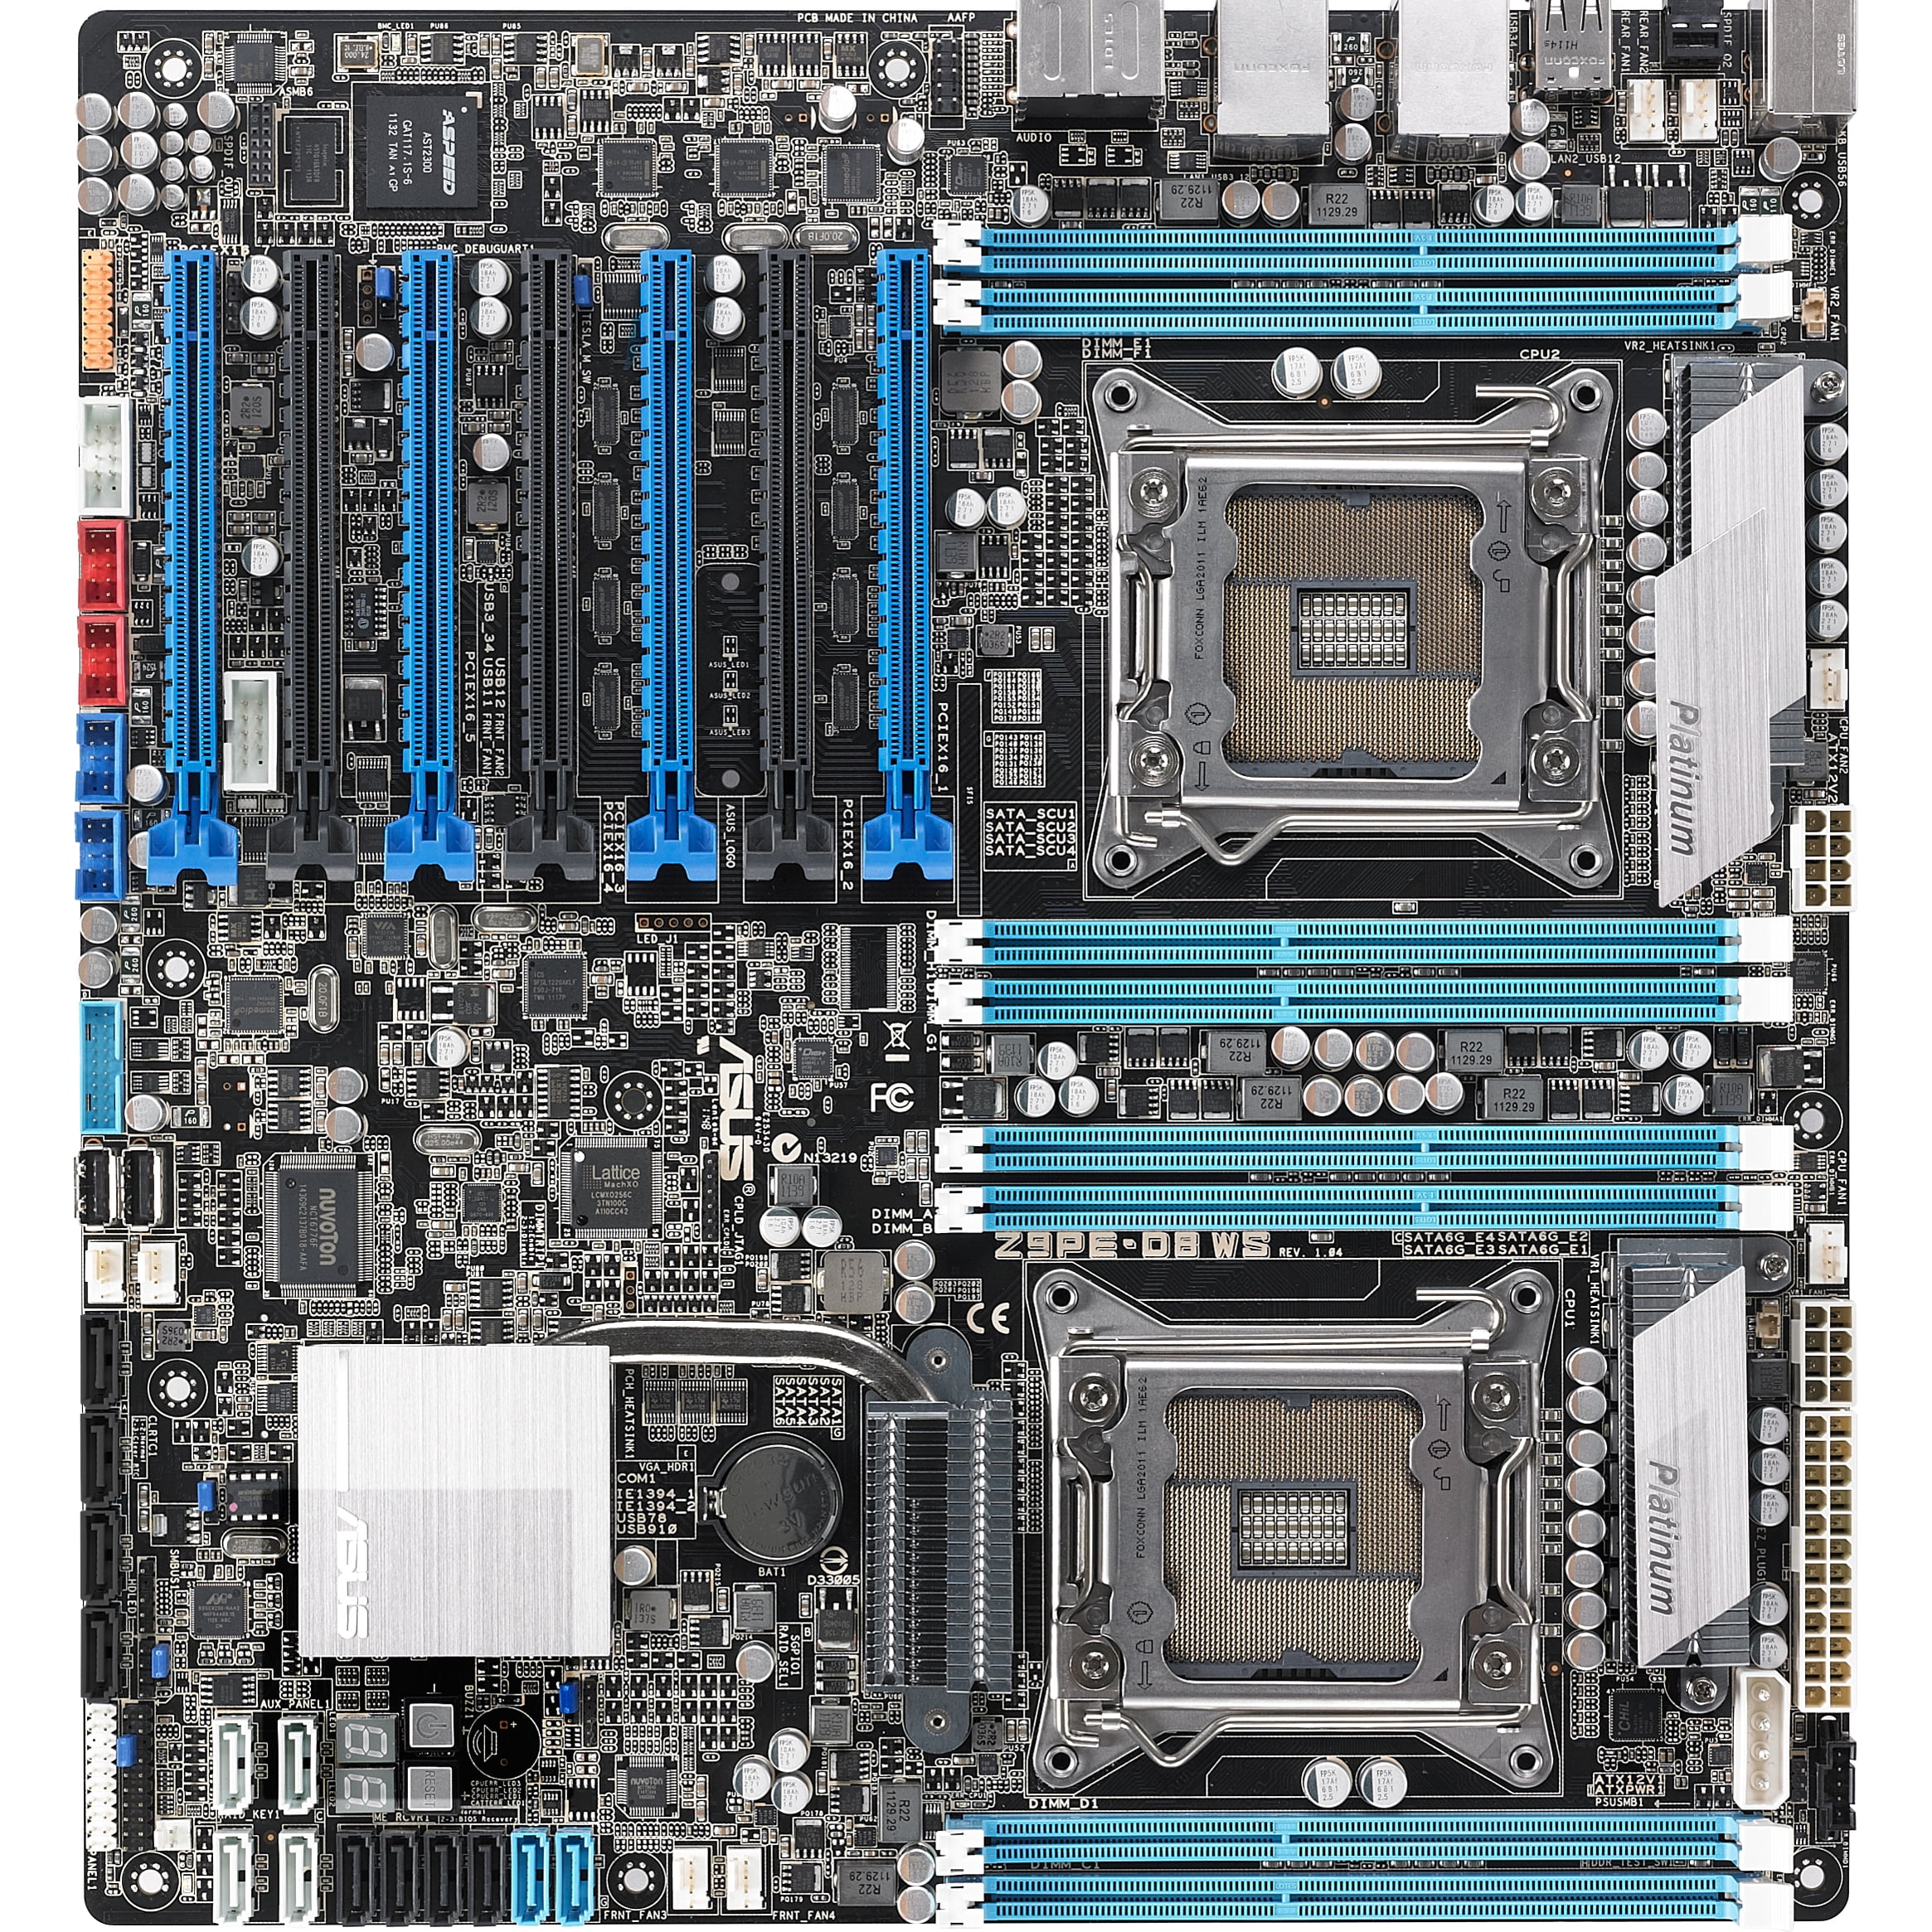 Asus Z9PE-D8 WS Workstation Motherboard, Intel Chipset, Socket R LGA-2011, SSI EEB - image 1 of 2